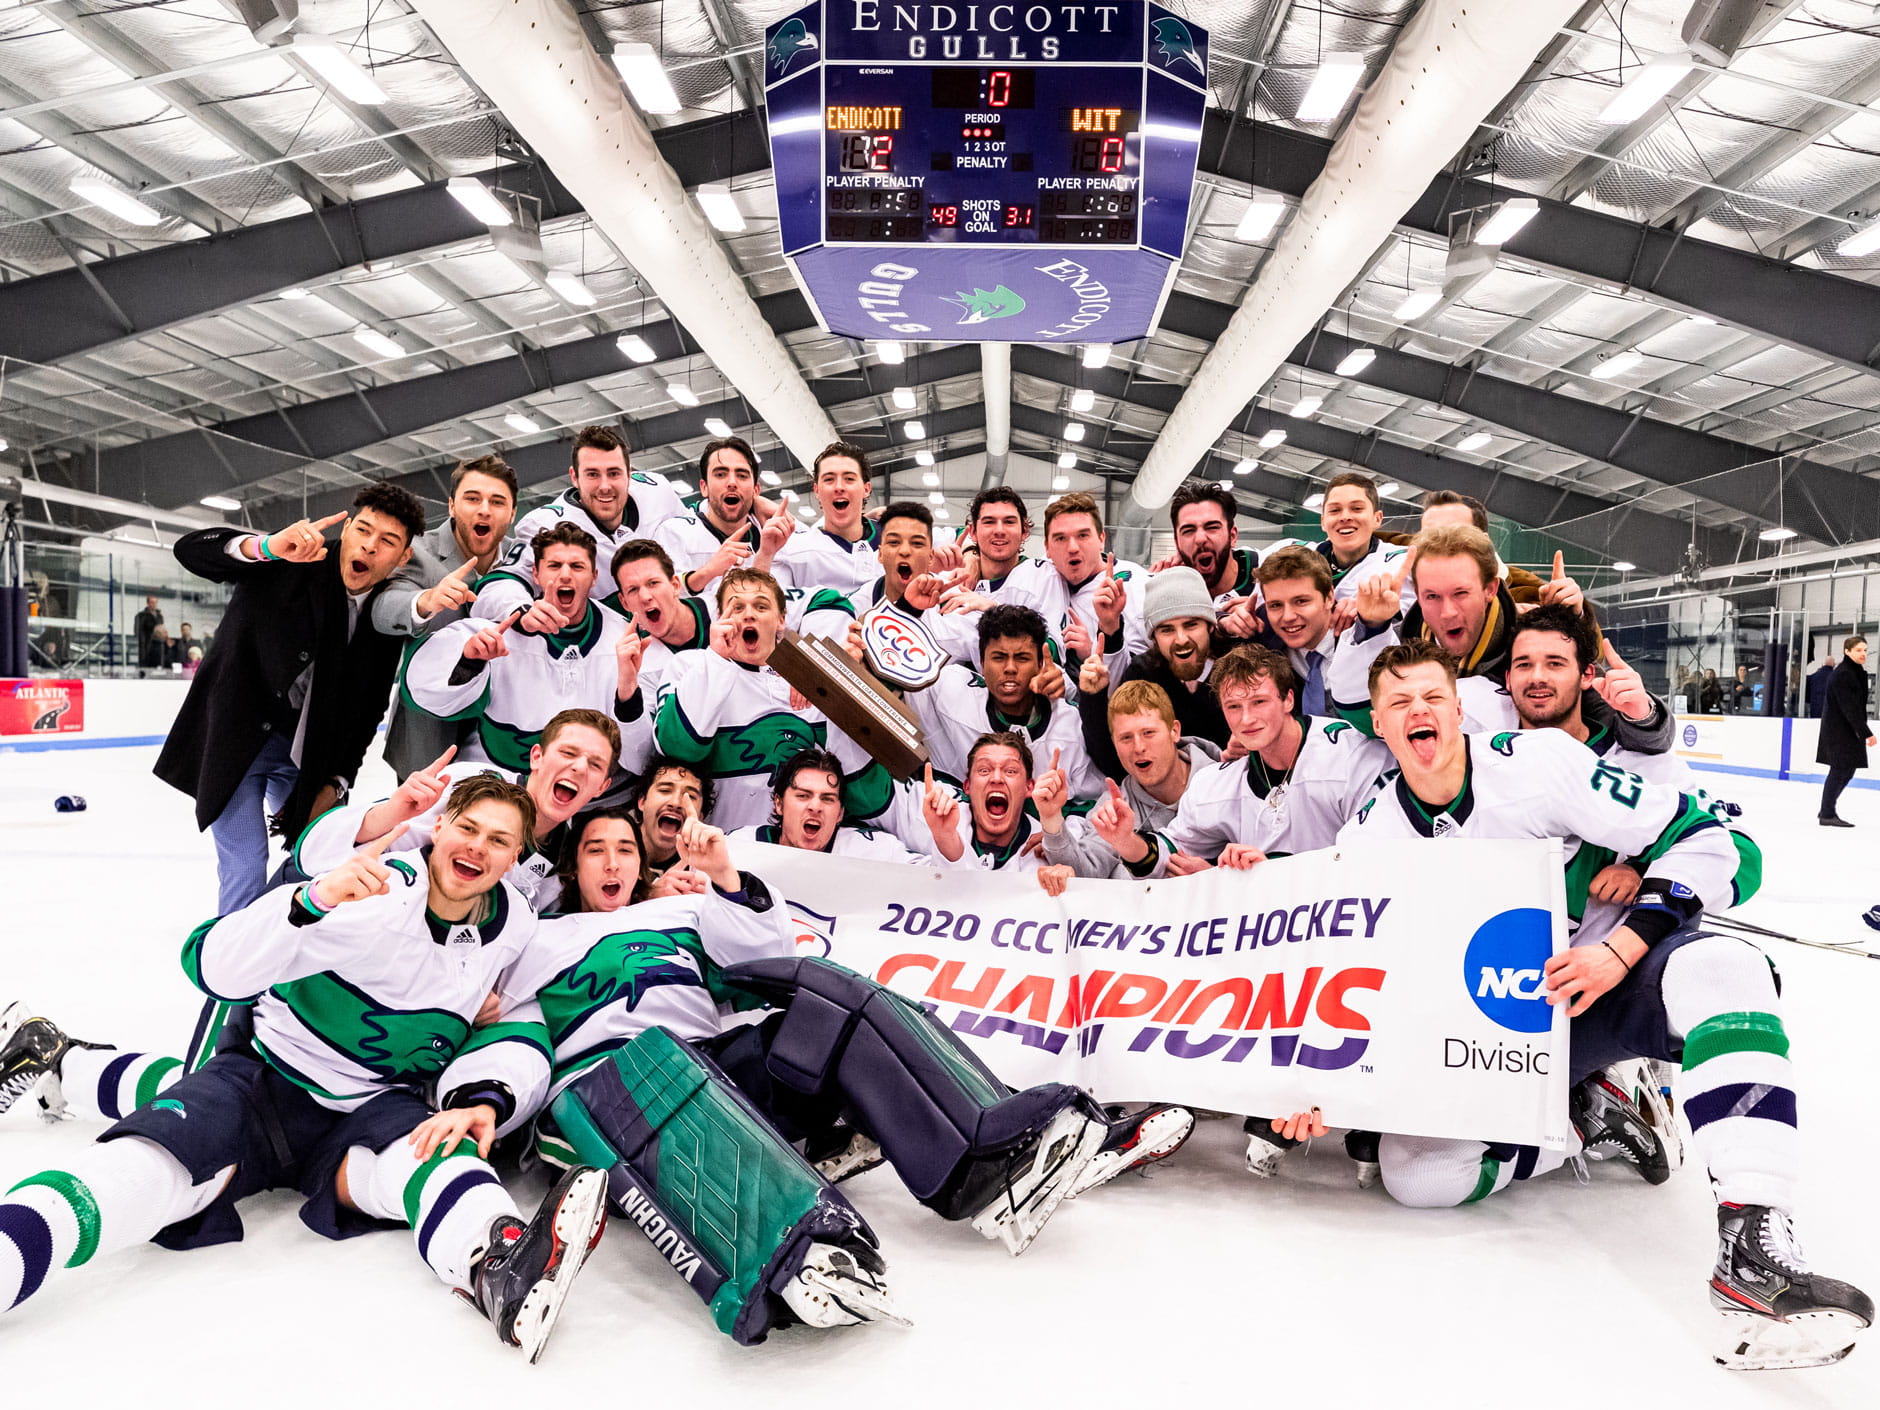 Endicott men's hockey team celebrates CCC title